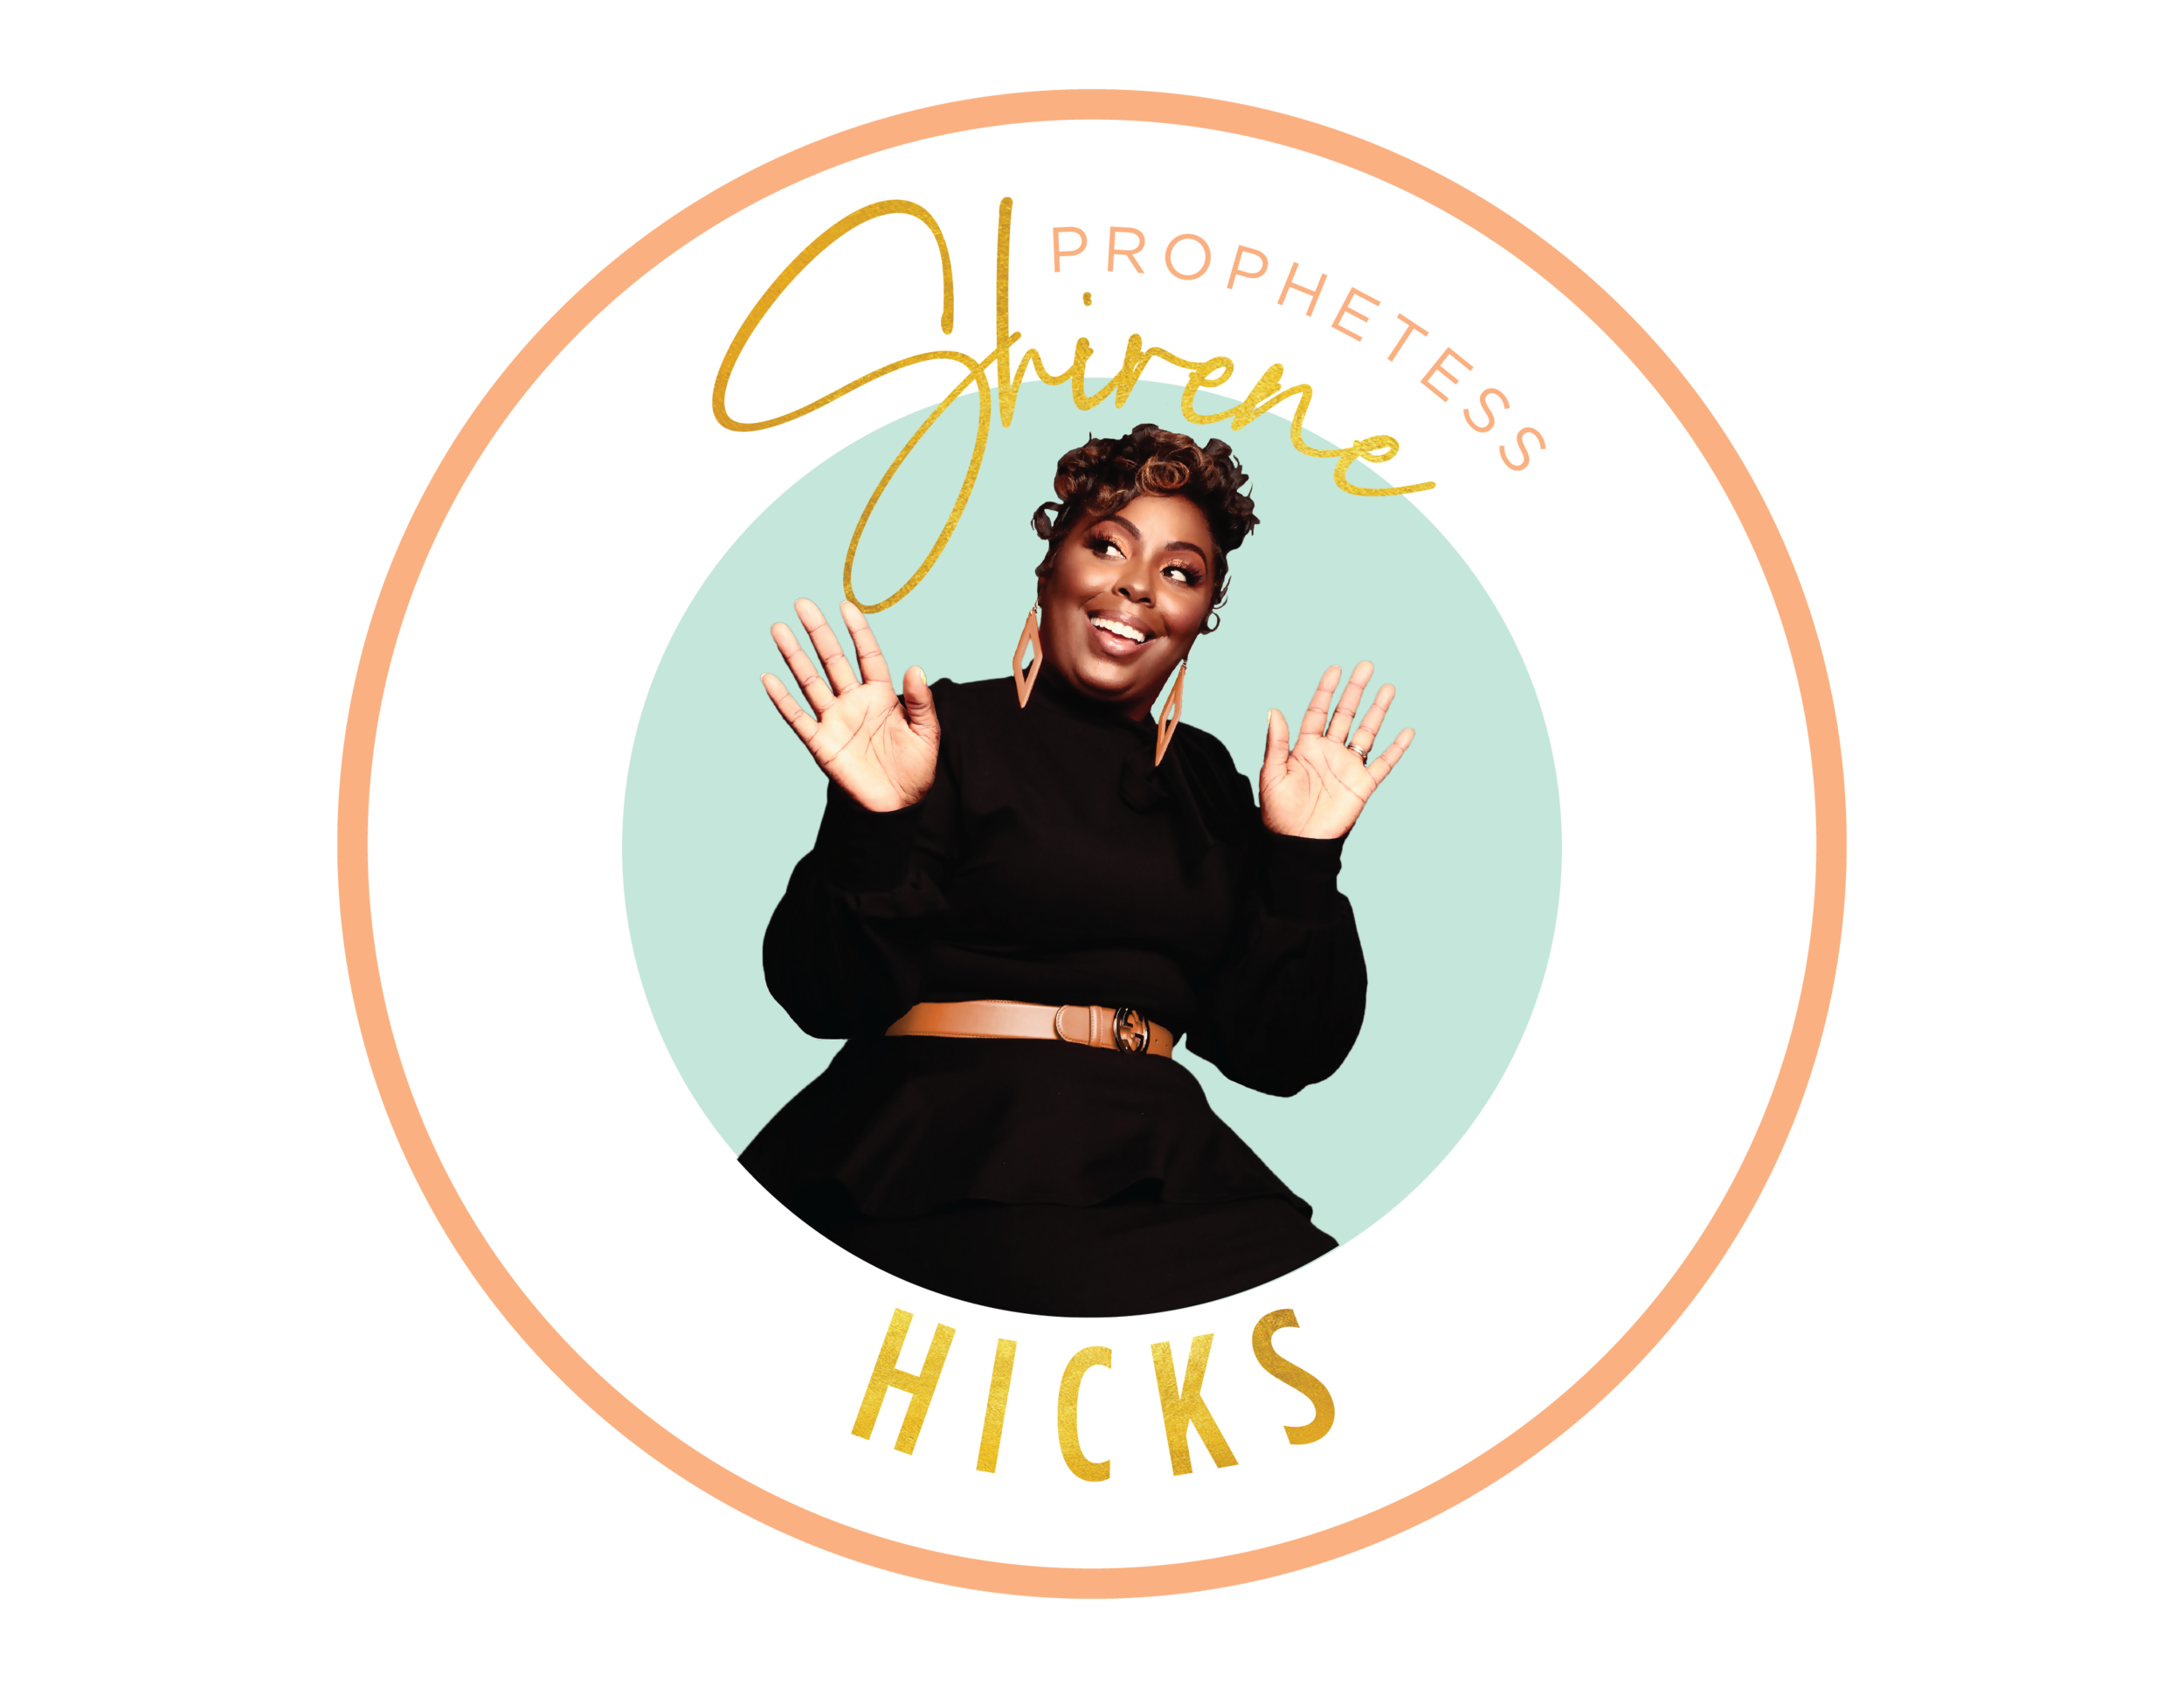 Prophetess Shirene Hicks